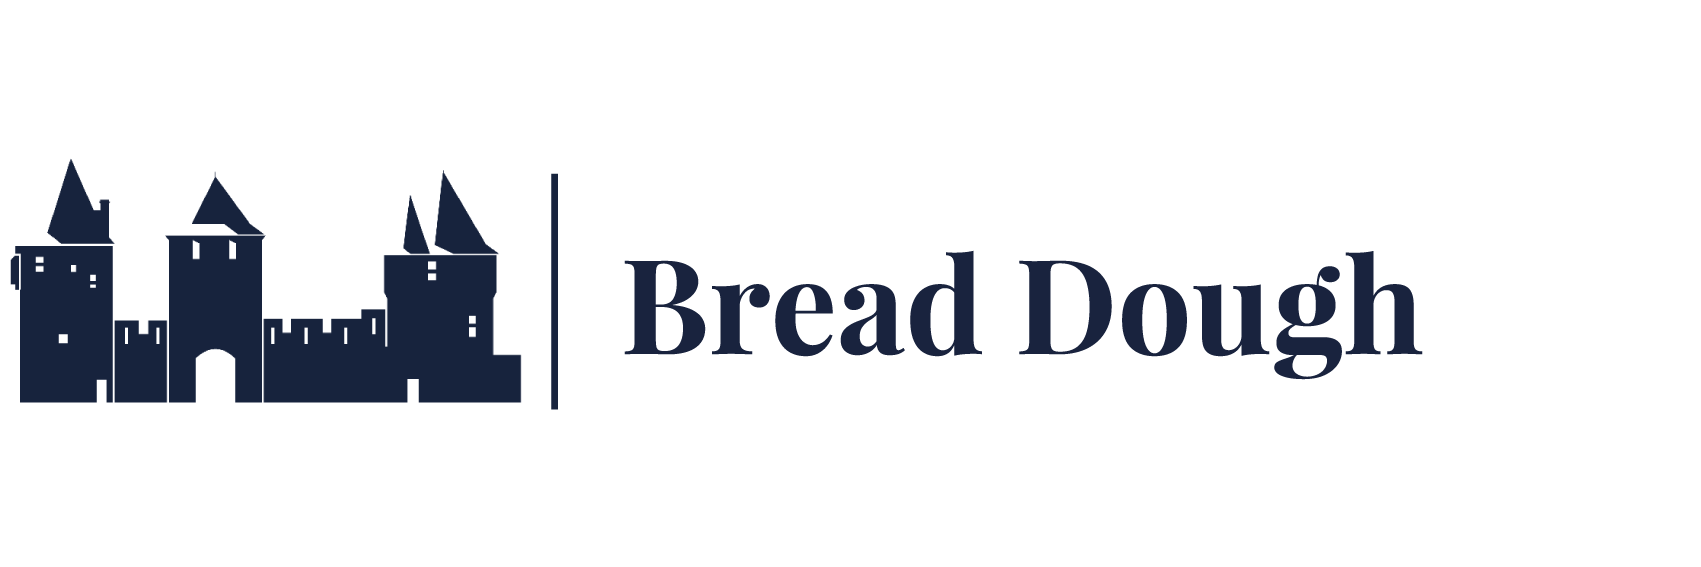 mix-logo-chateau-fougeres-gamme-bread-dough